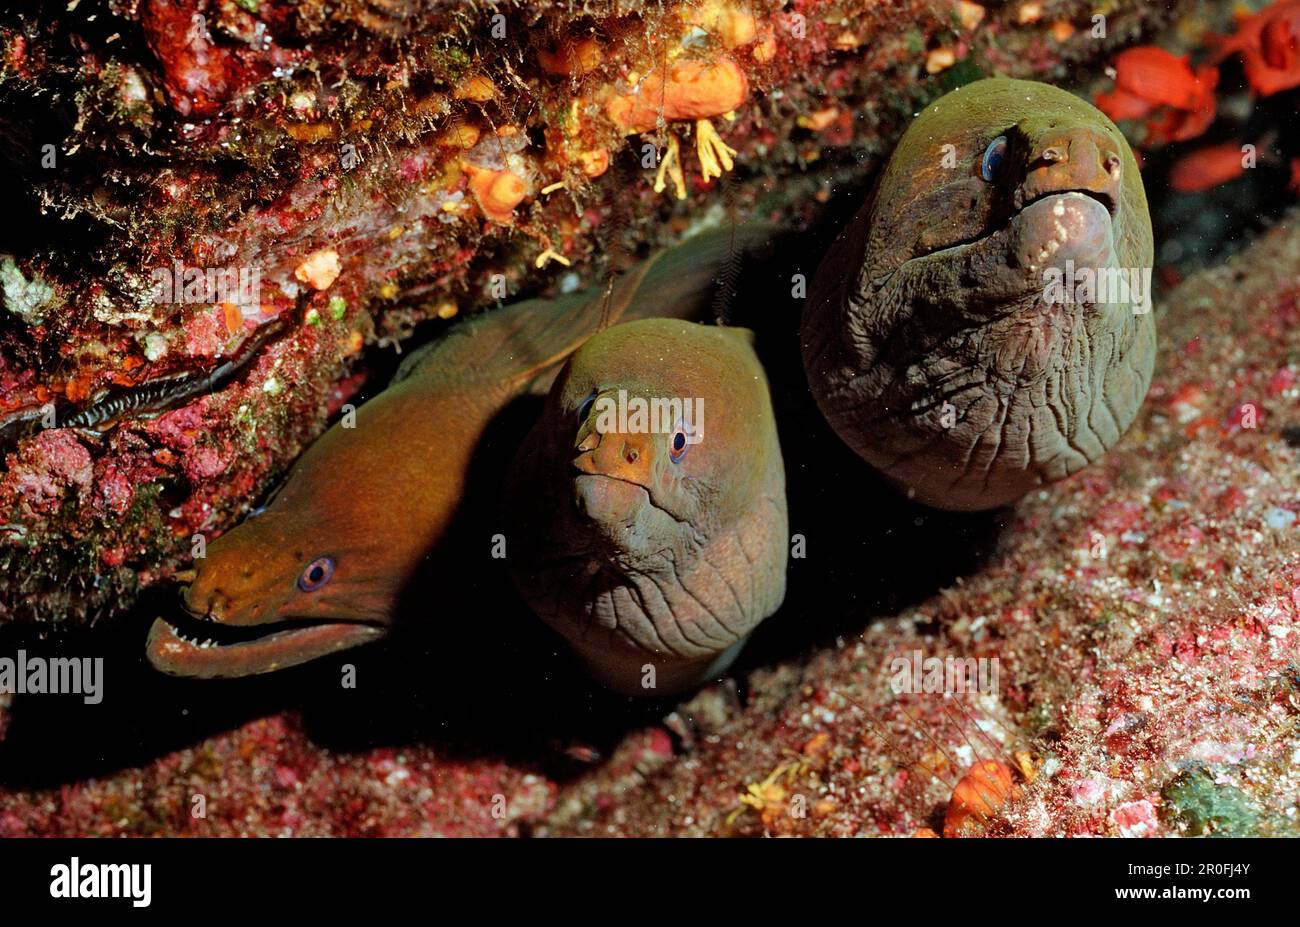 Panamic green moray eel, Gymnothorax castaneus, Mexico, Sea of Cortez, Baja California, La Paz Stock Photo